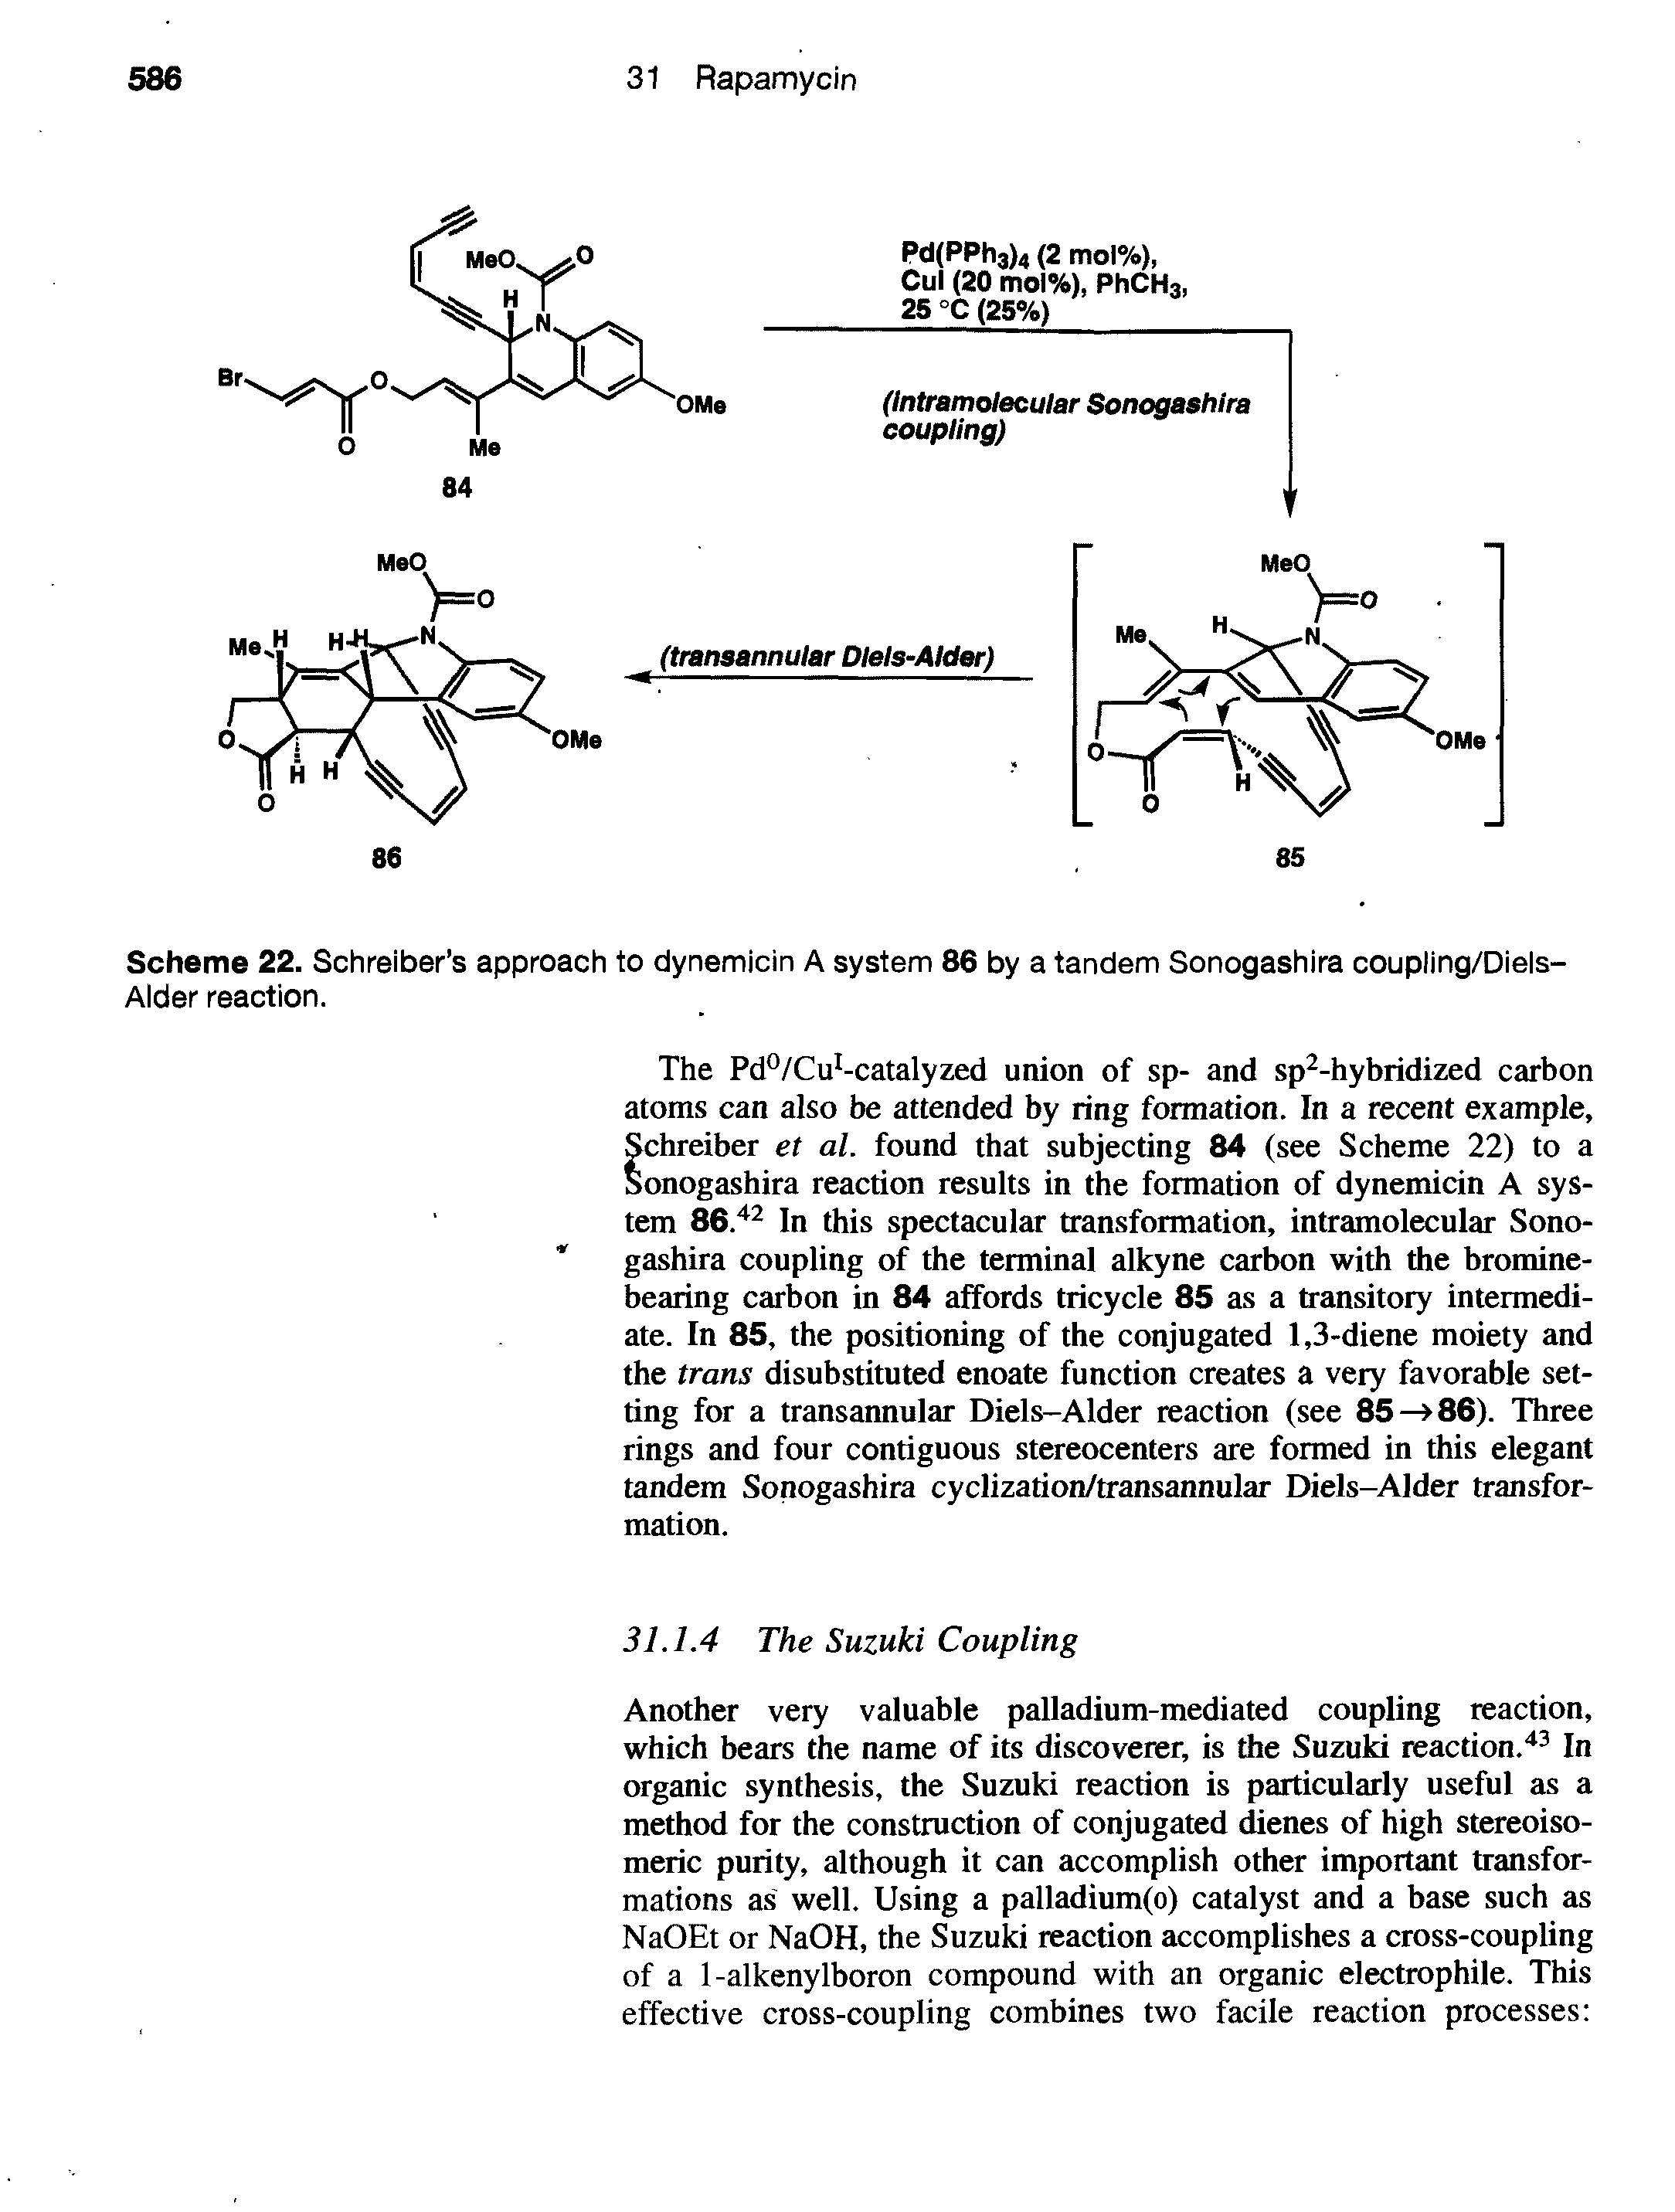 Scheme 22. Schreiber s approach to dynemicin A system 86 by a tandem Sonogashira coupling/Diels-Alder reaction.